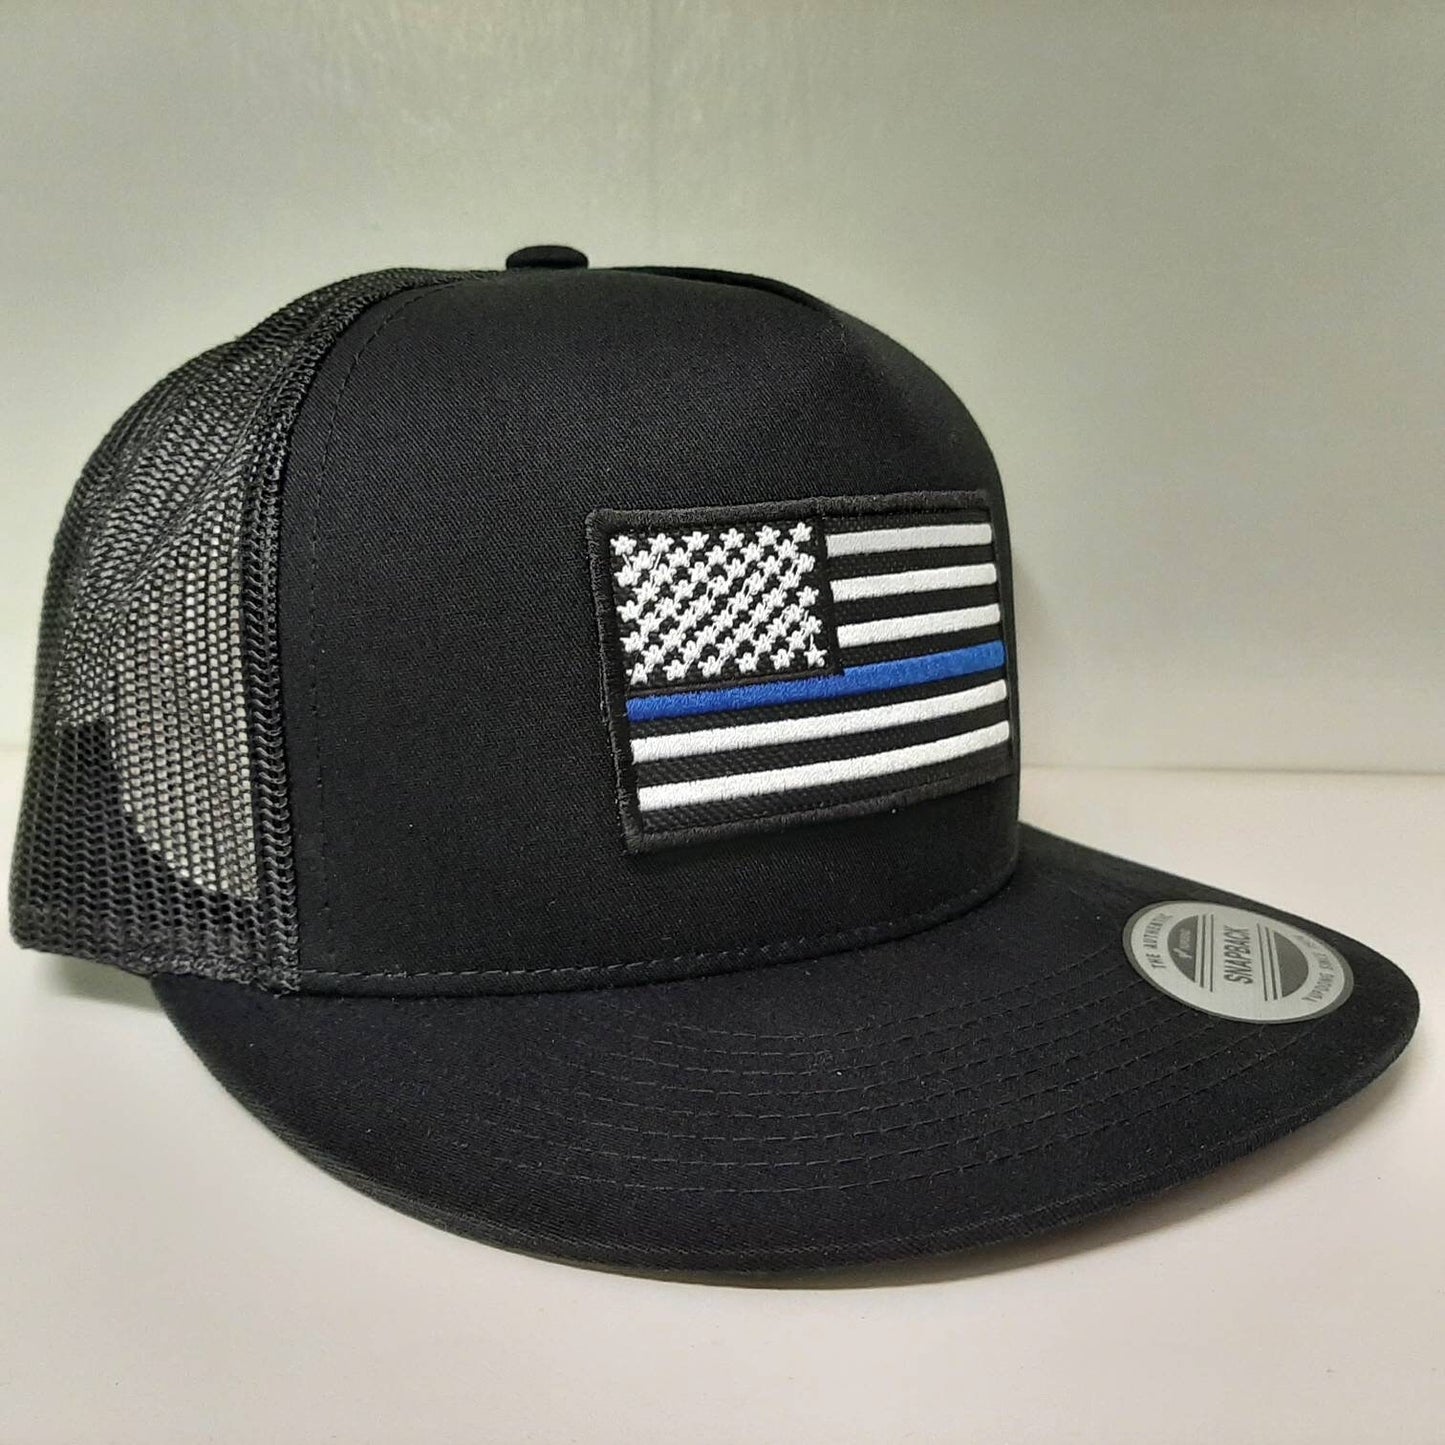 Thin Blue Line Yupoong Classics Trucker Snapback mesh Baseball Cap Hat Flat Bill Black Police Support Flag Patch